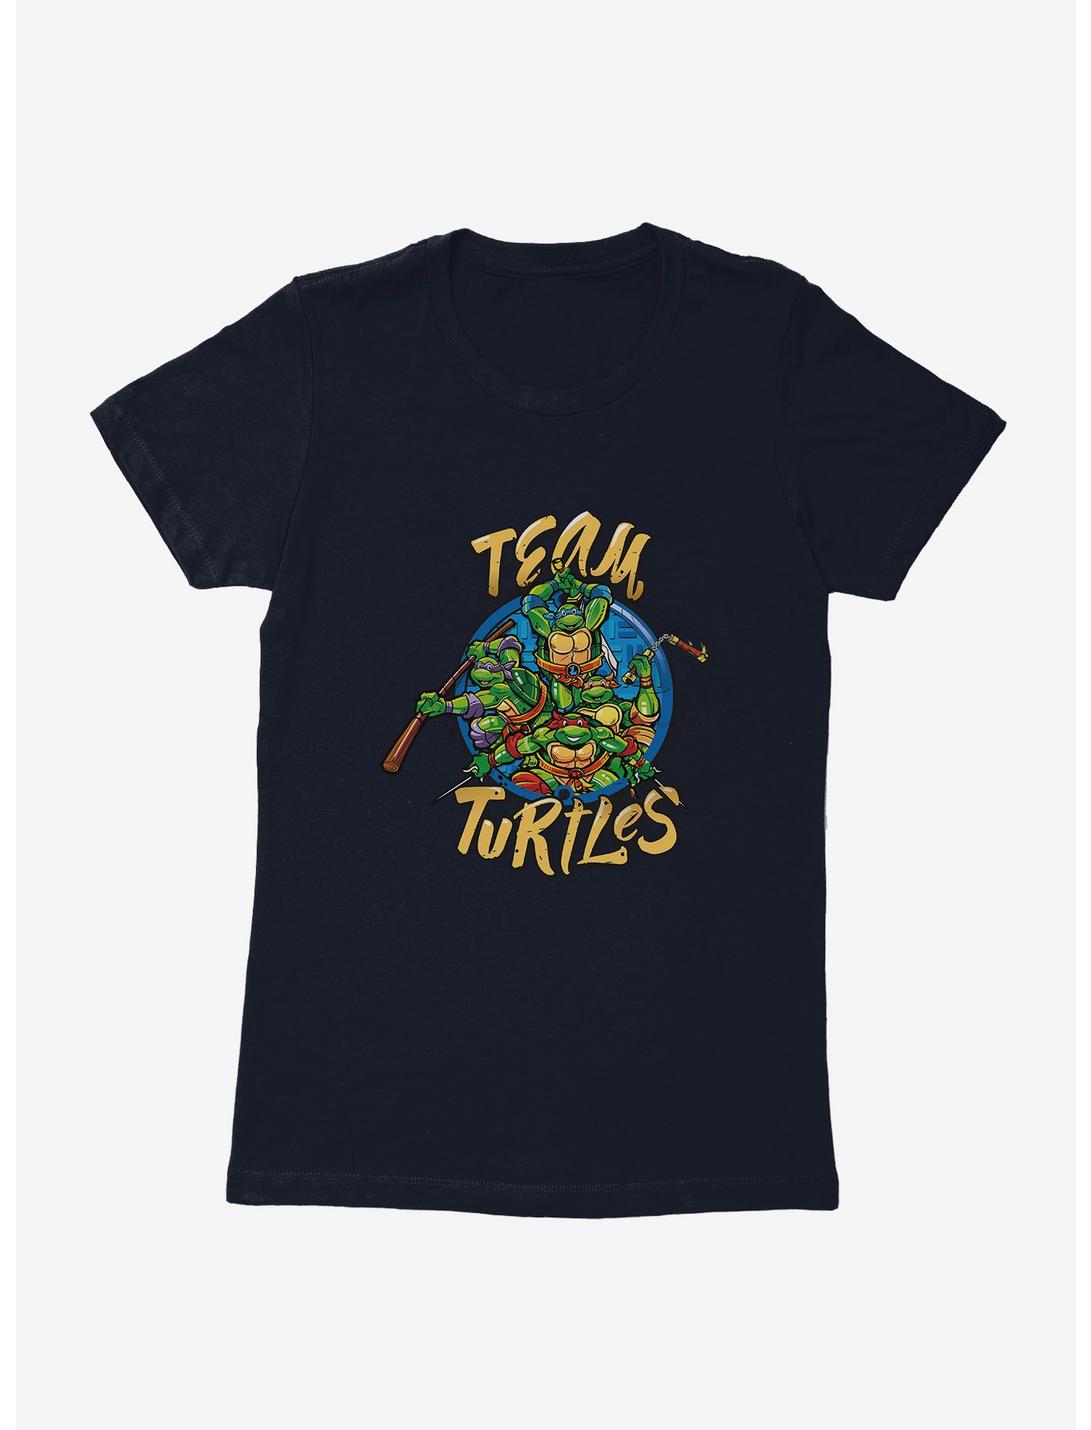 Teenage Mutant Ninja Turtles Team Turtle Group Poses Circle Womens T-Shirt, MIDNIGHT NAVY, hi-res